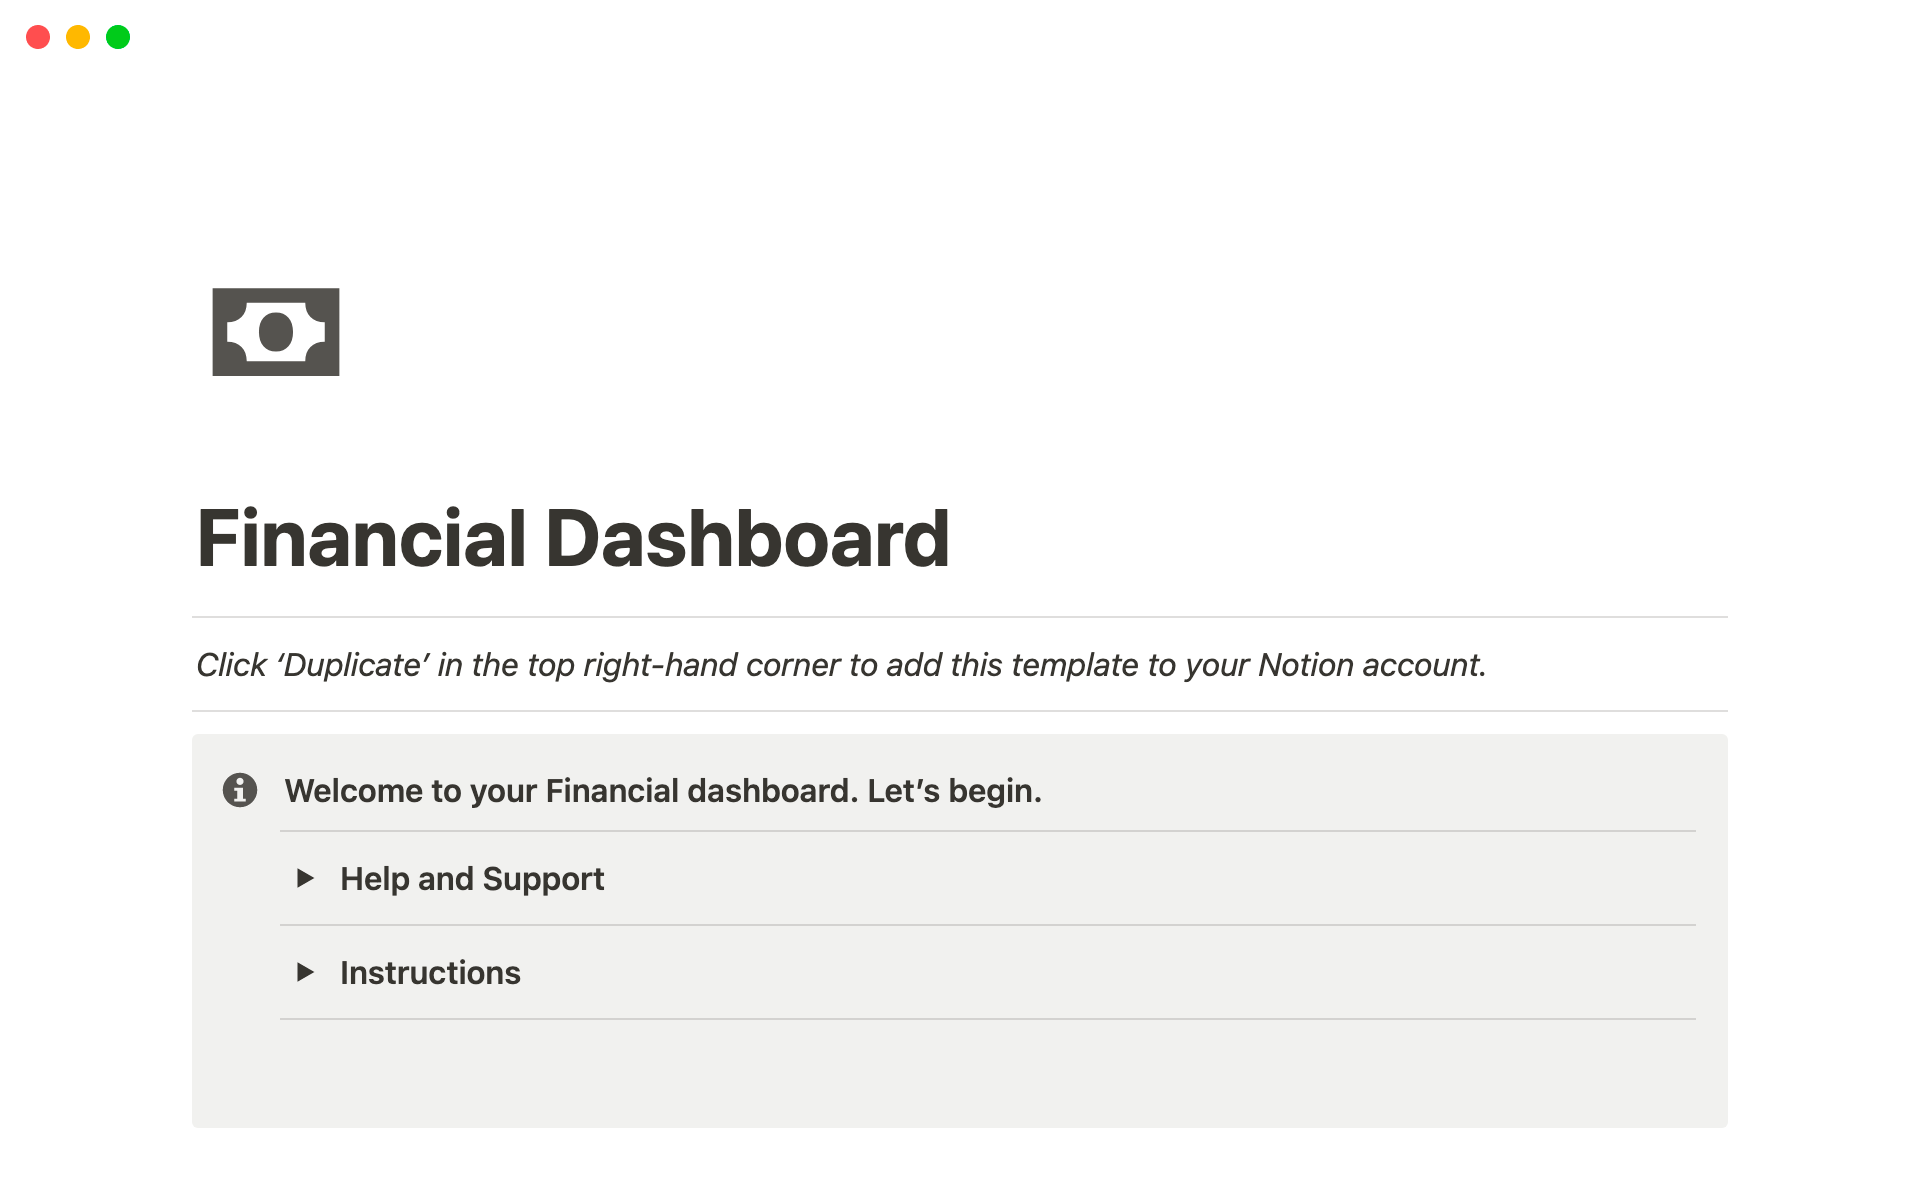 Aperçu du modèle de Financial Dashboard